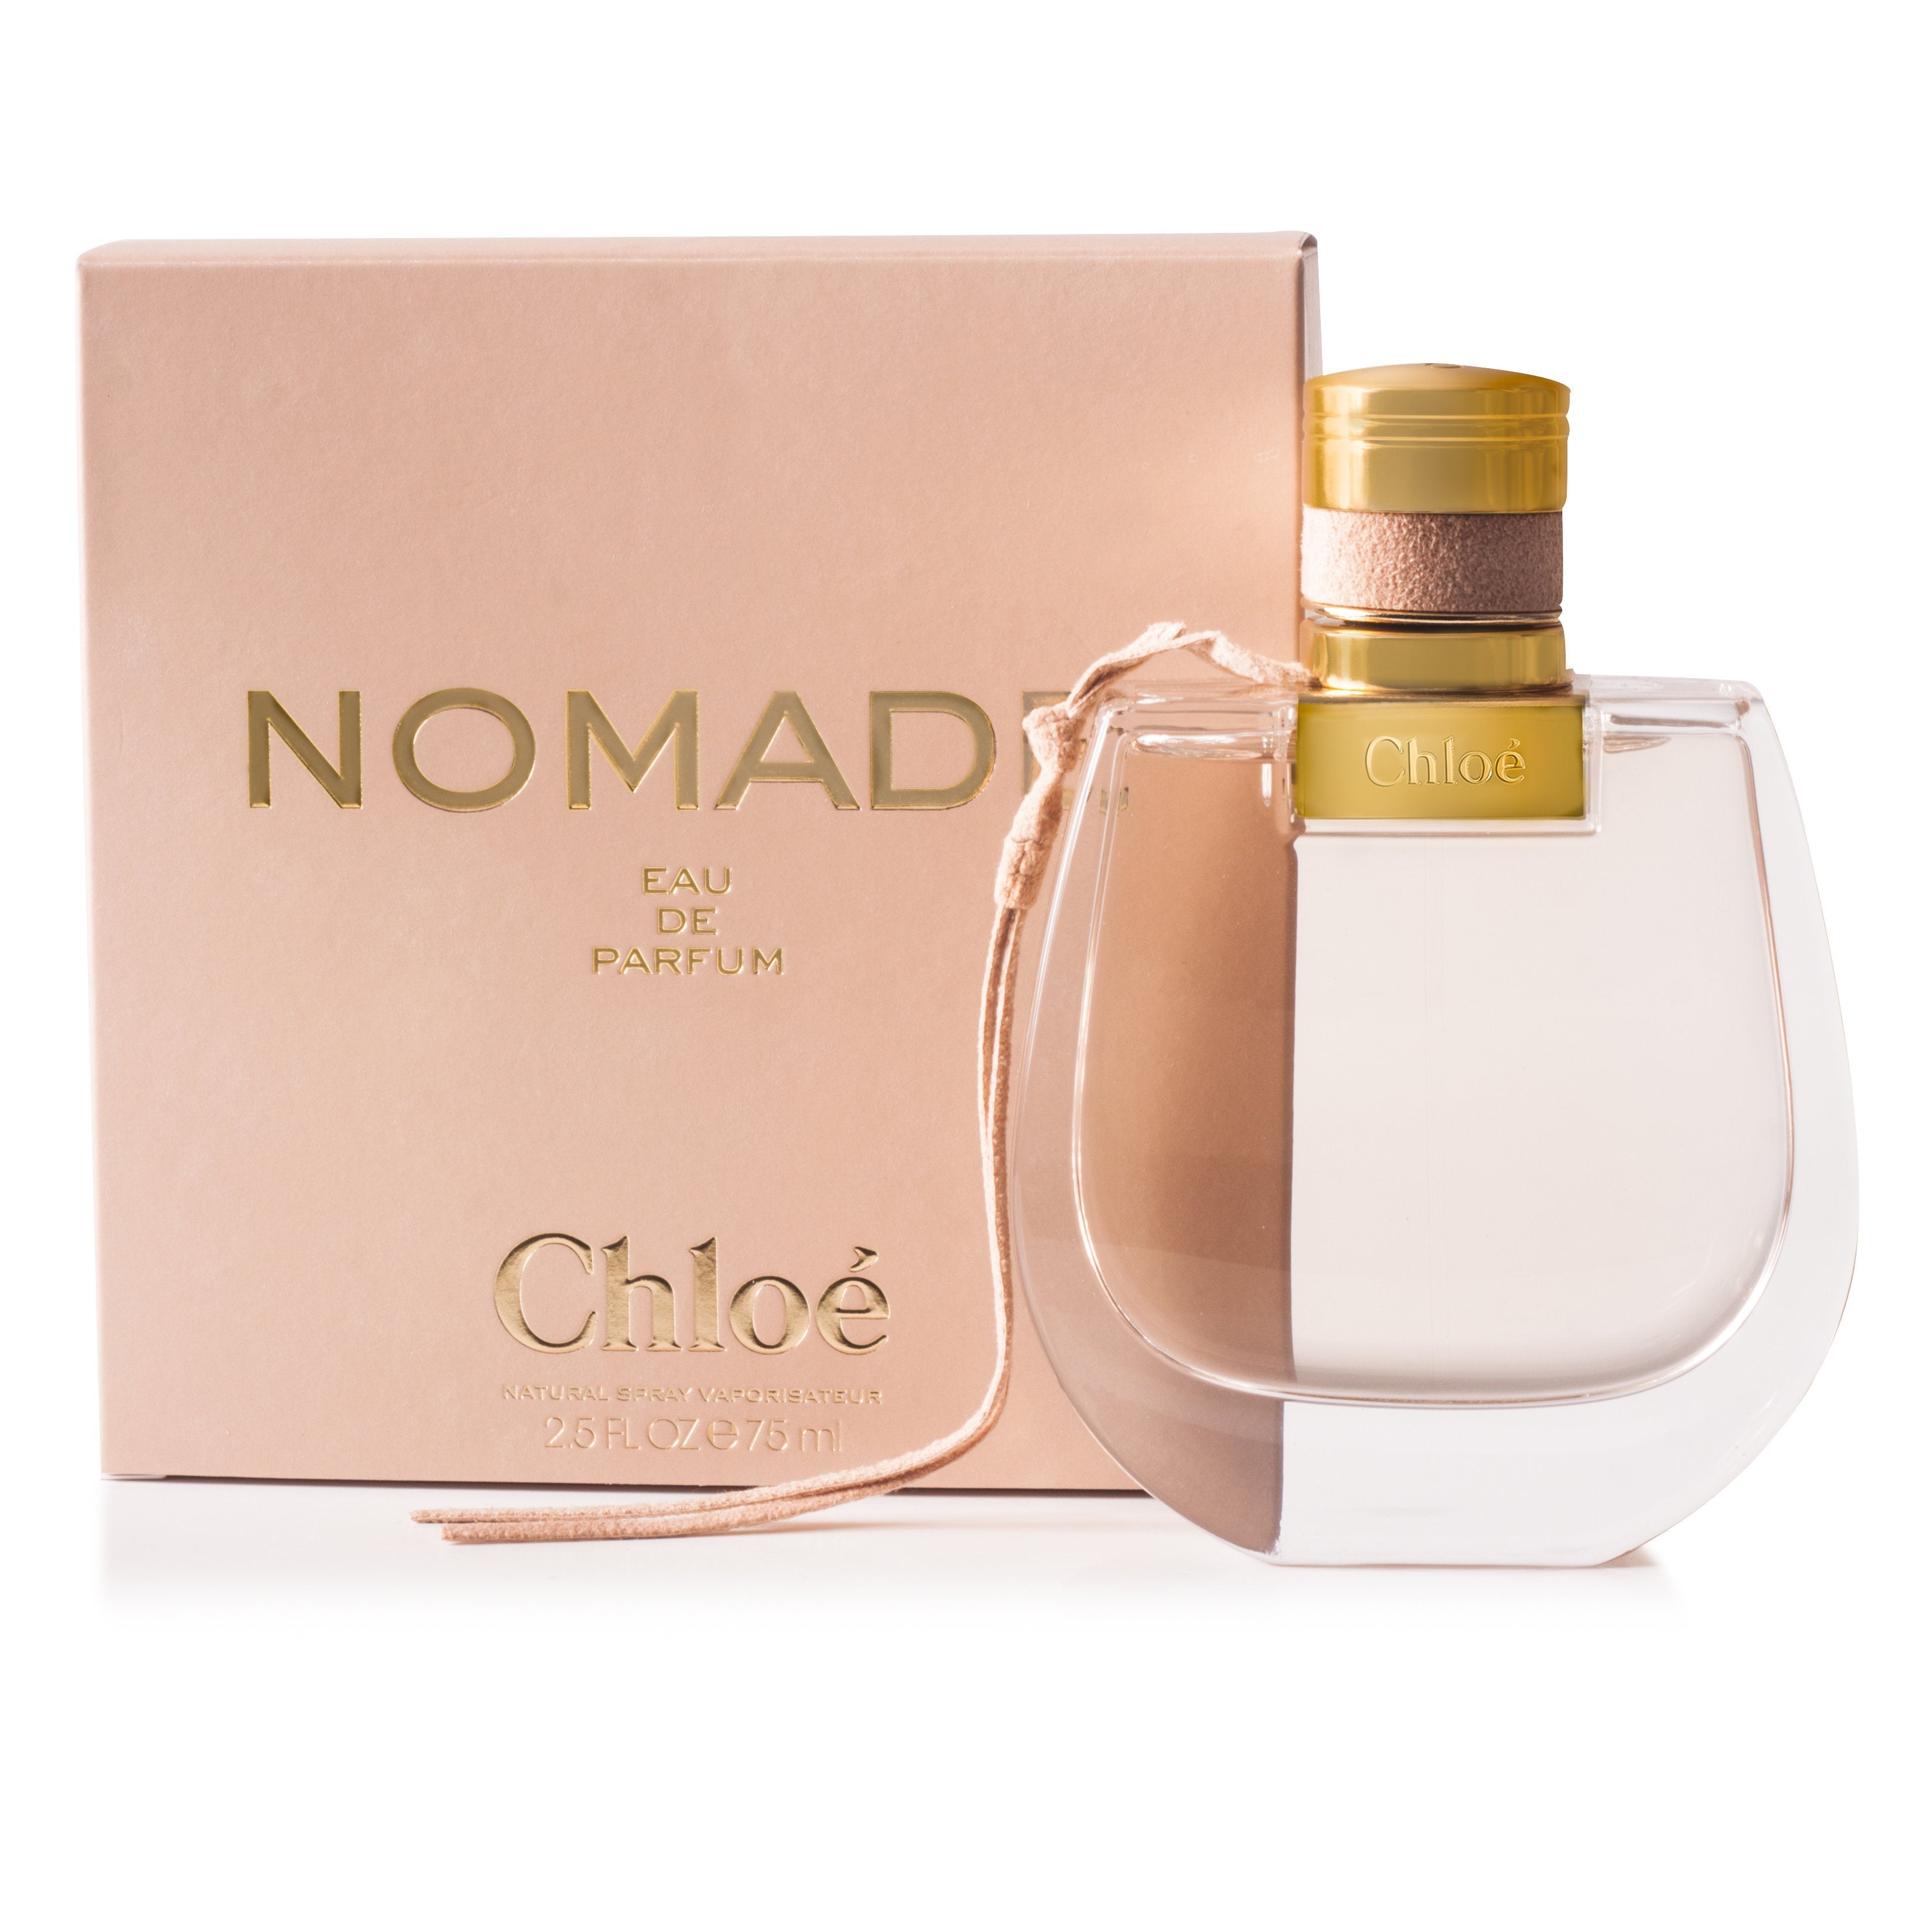 – Chloe de Perfumania by Spray for Nomade Women Parfum Eau